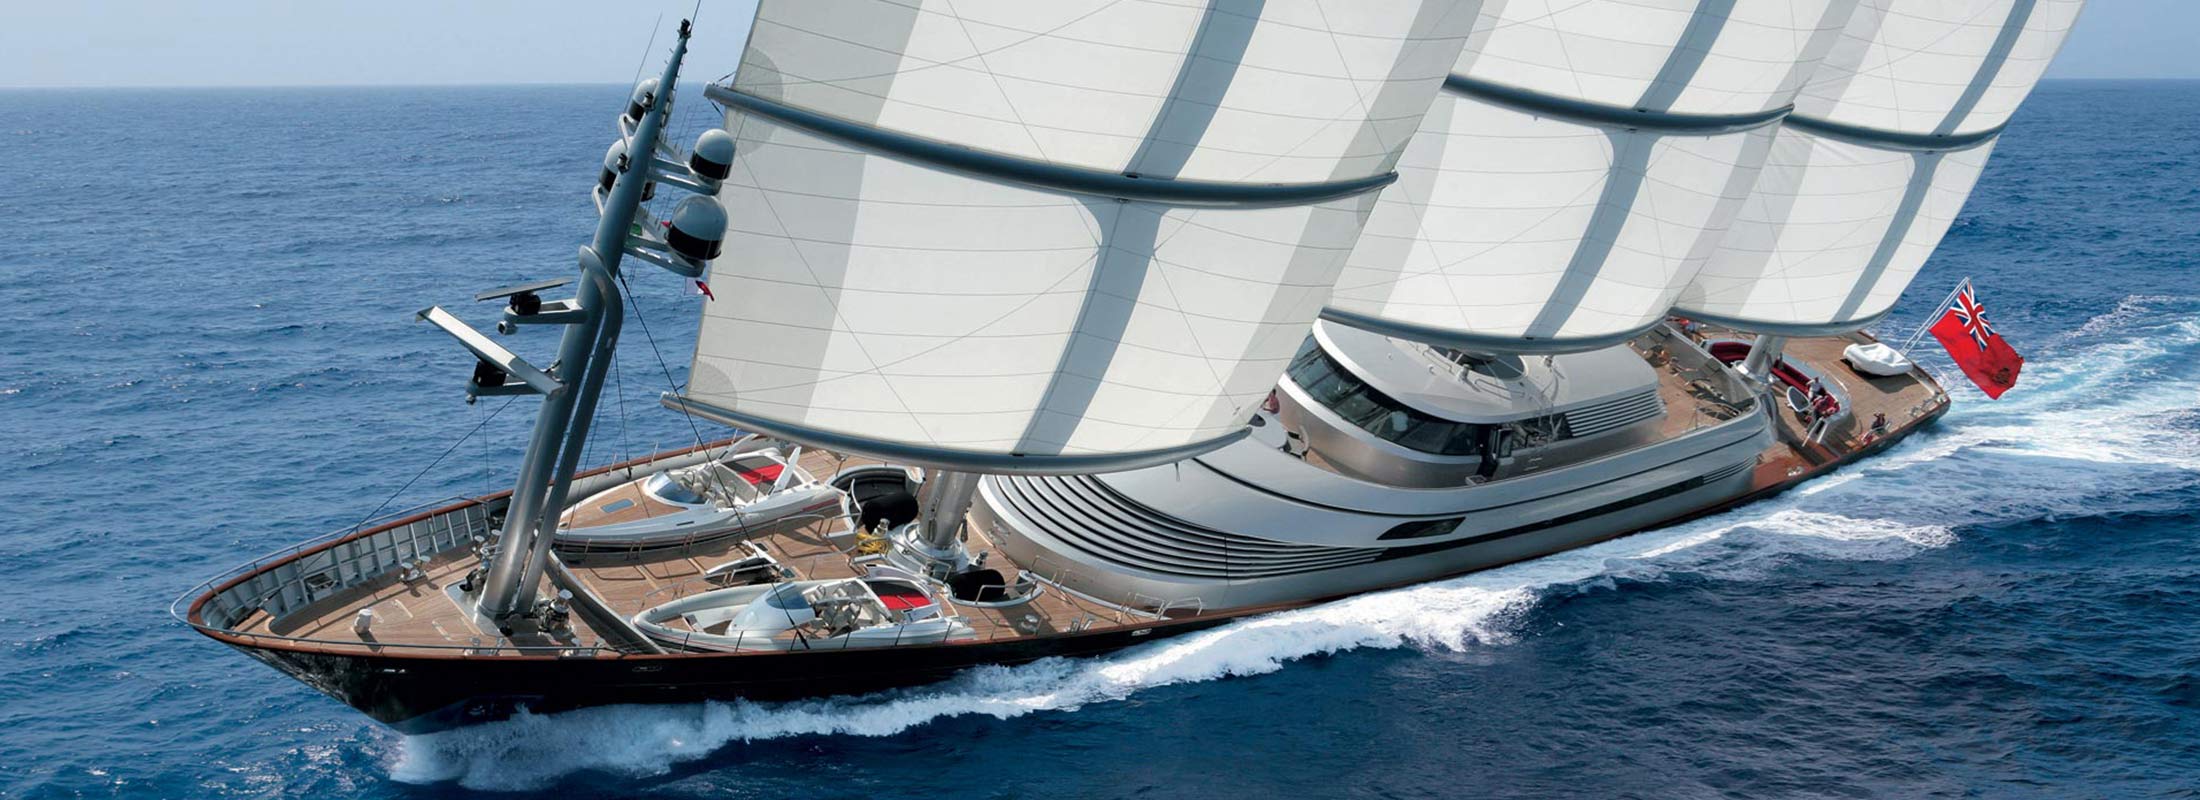 Maltese Falcon Sailing Yacht for Charter Mediterranean slider 2